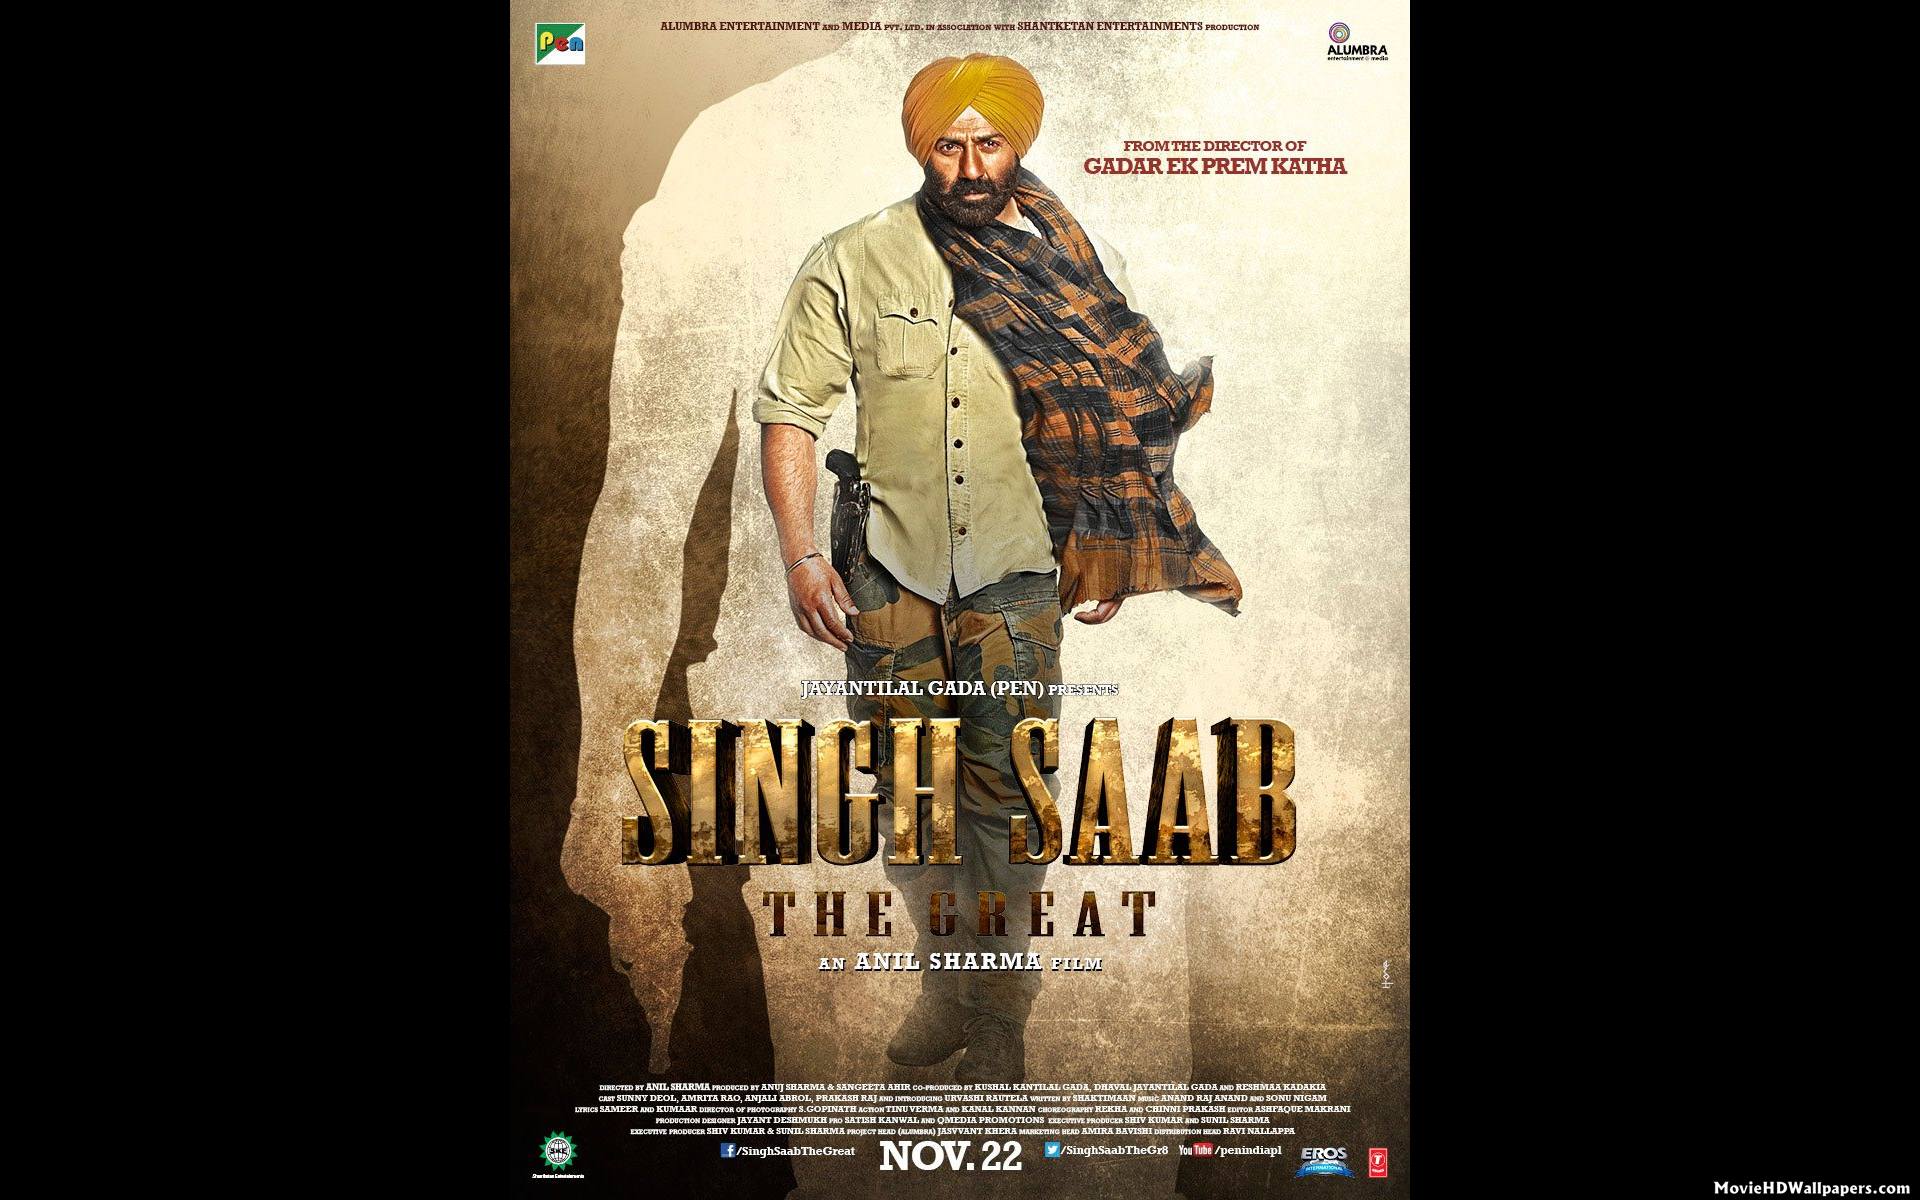 Singh Saab The Great movie free mp4